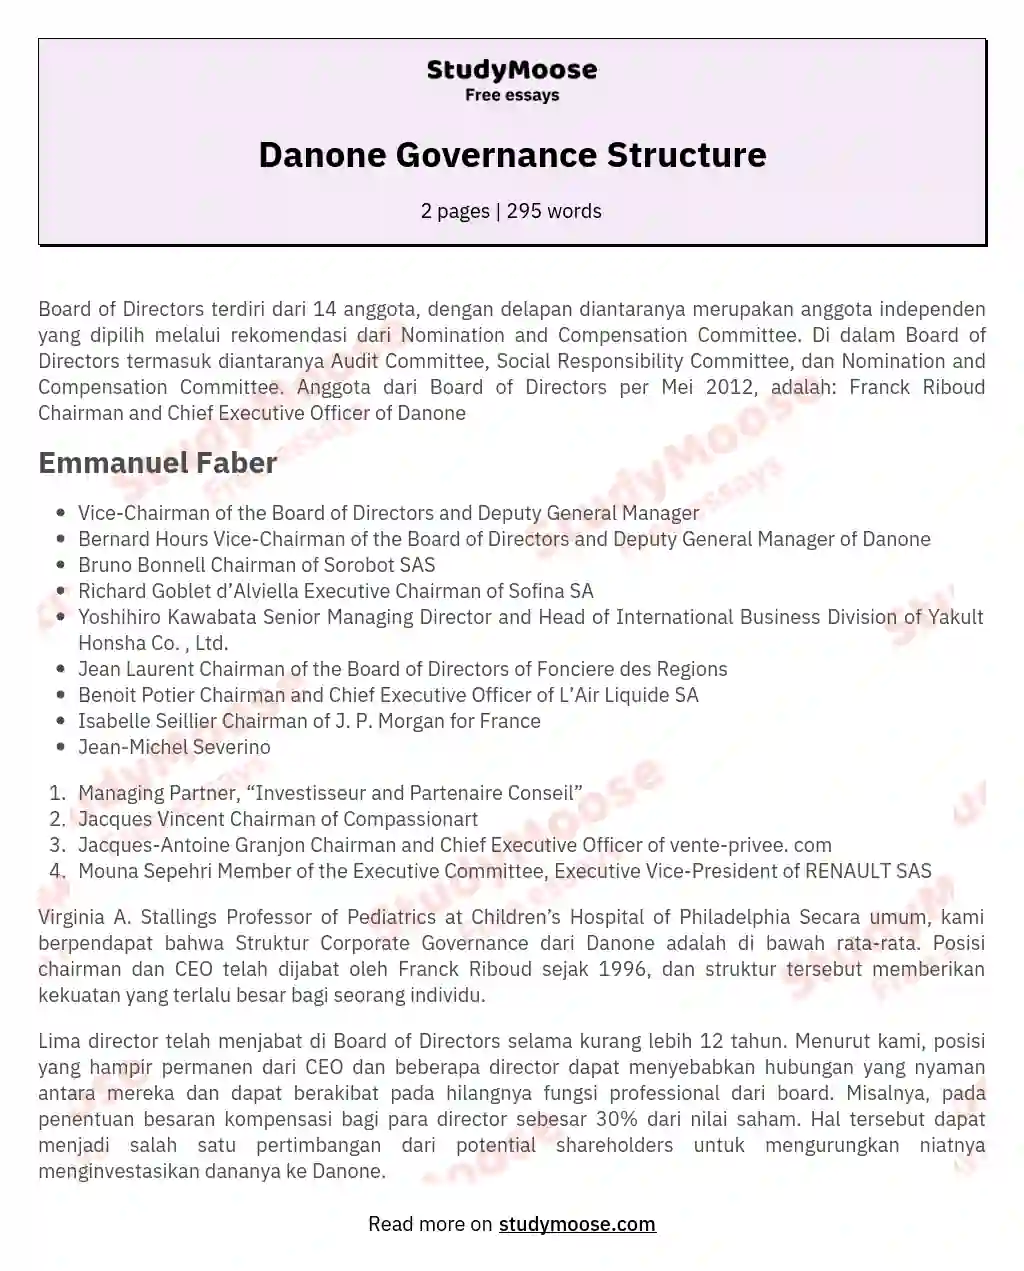 Danone Governance Structure essay